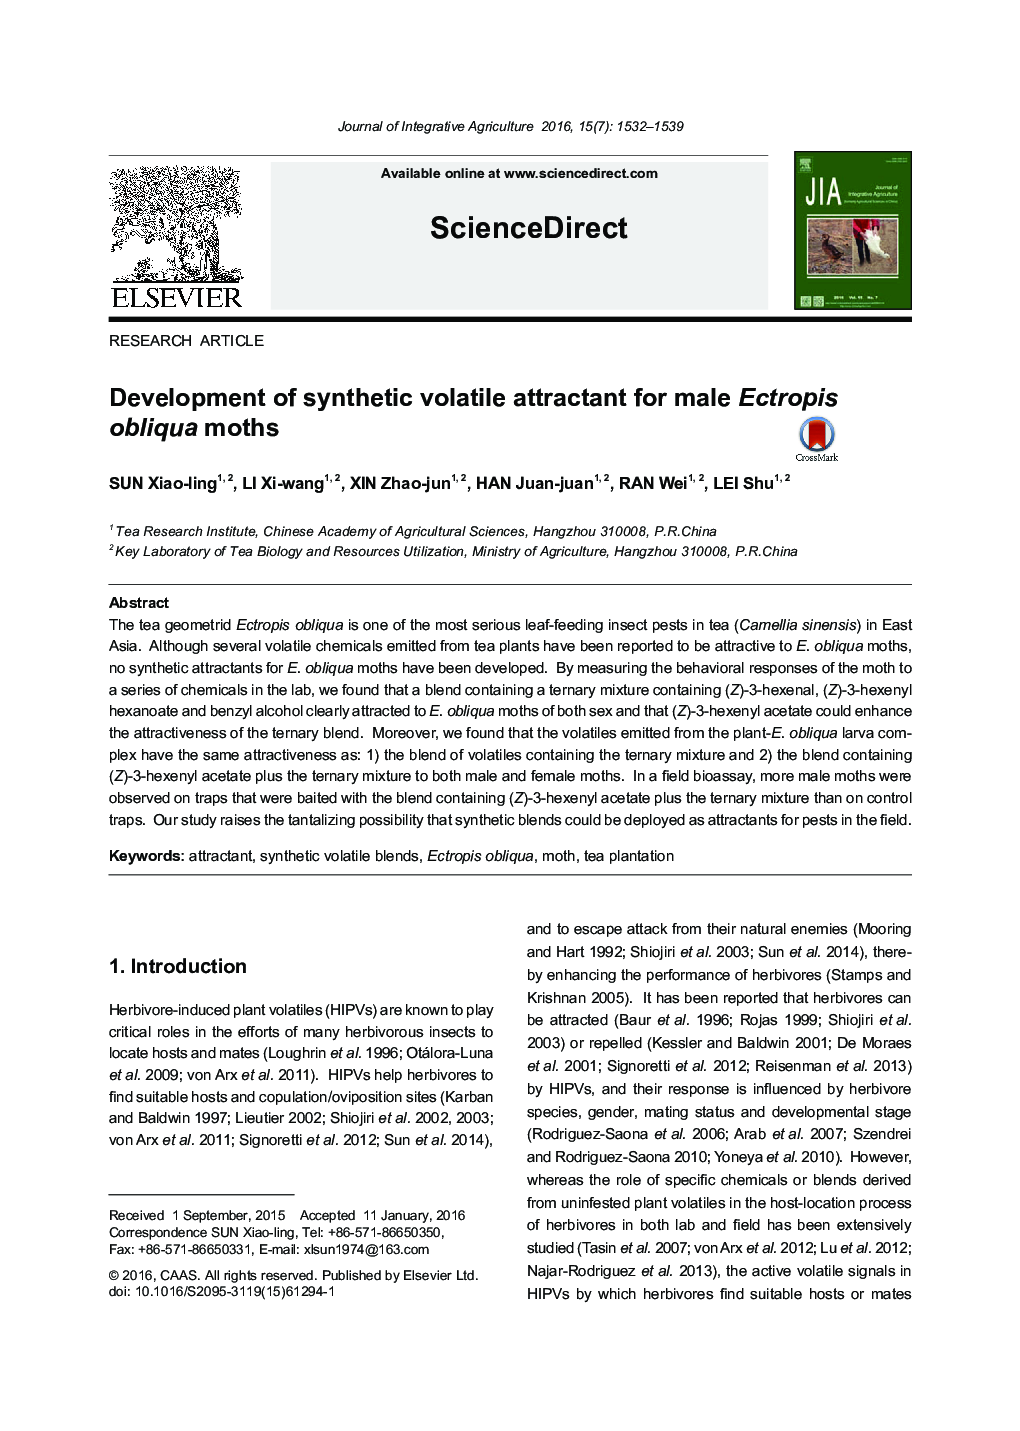 Development of synthetic volatile attractant for male Ectropis obliqua moths